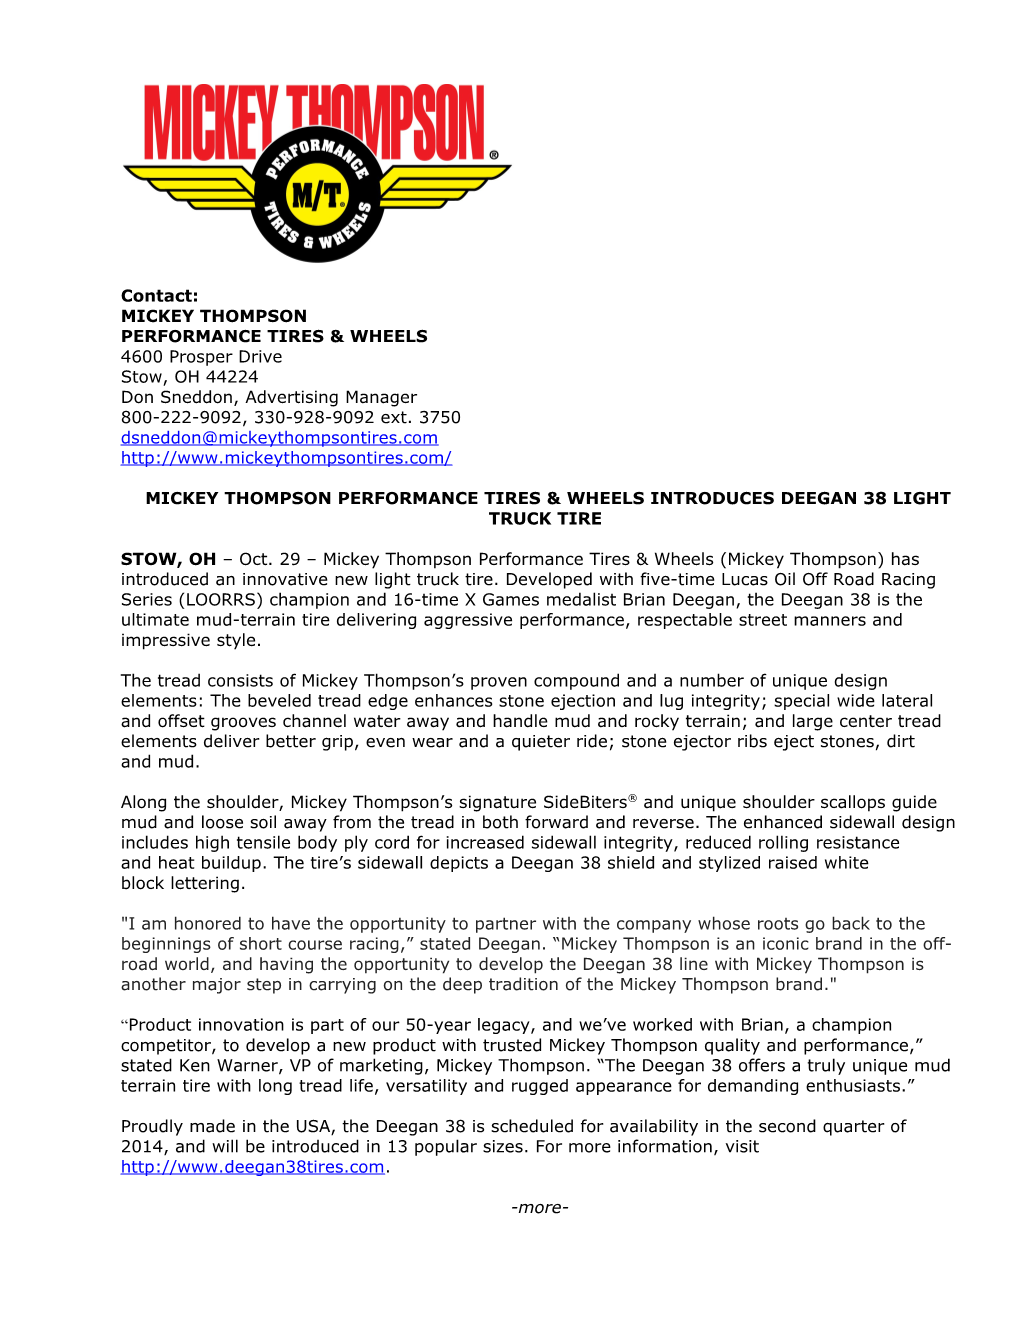 Mickey Thompson Performance Tires & Wheels Introduces Deegan 38 Light Truck Tire